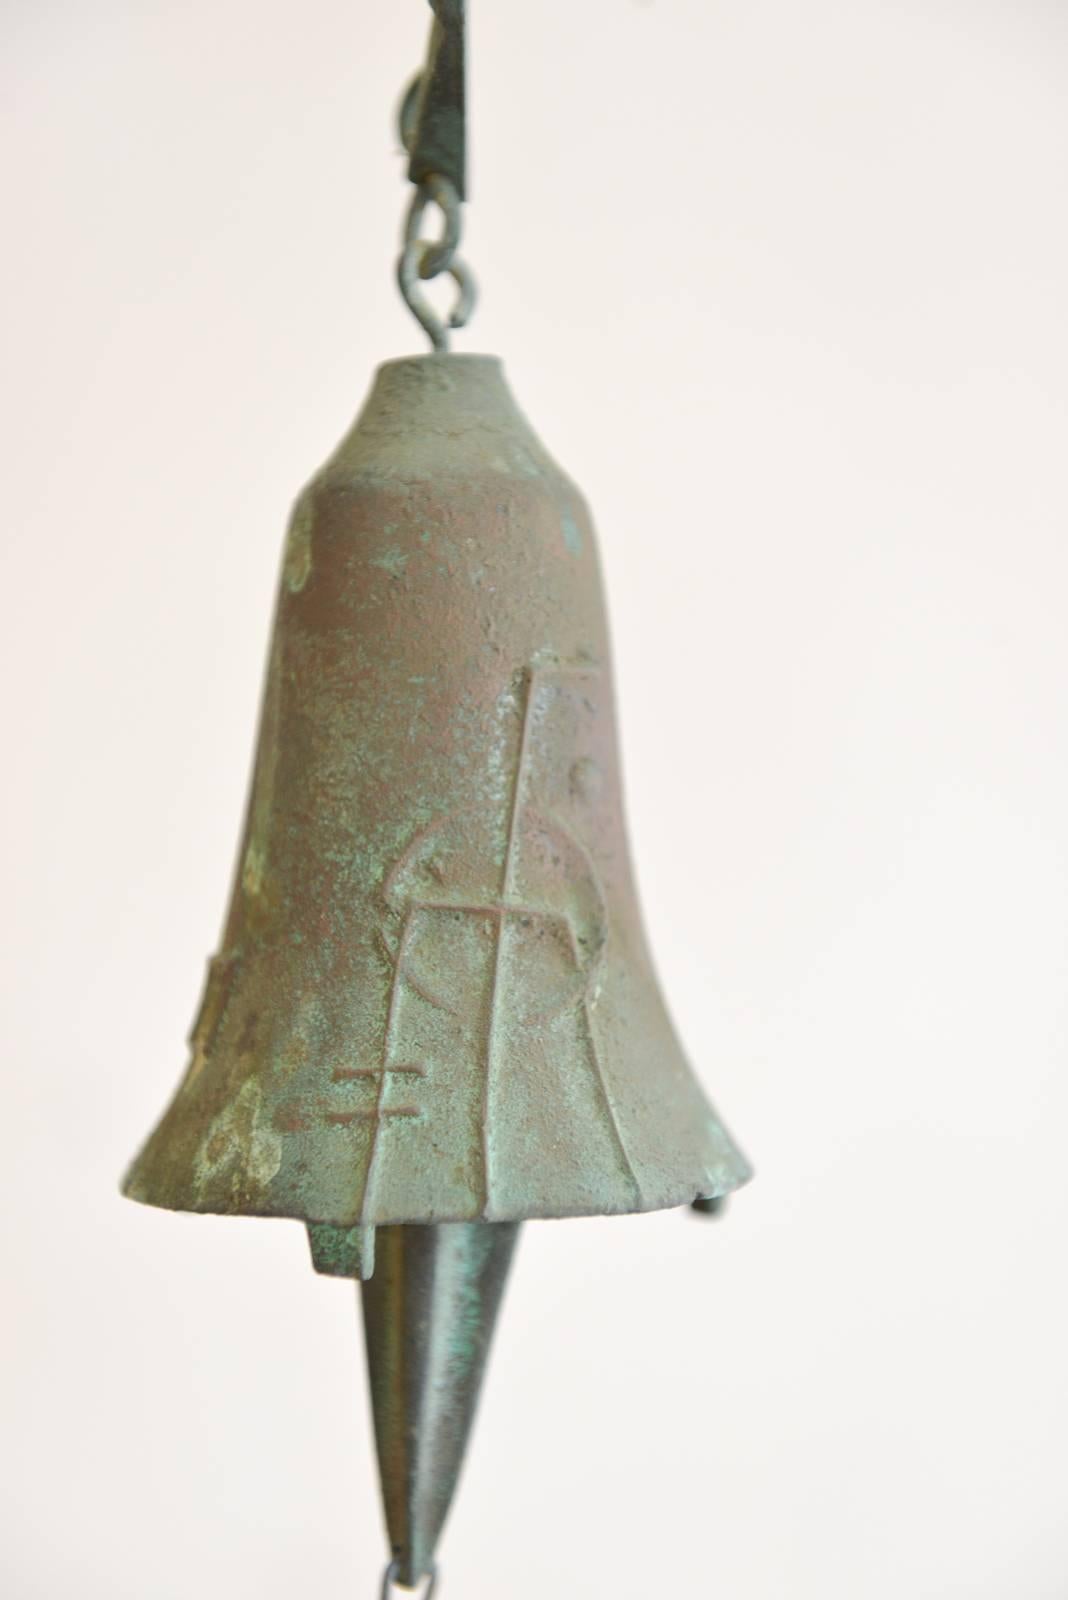 American Vintage Bronze Windbell by Paolo Soleri, circa 1965